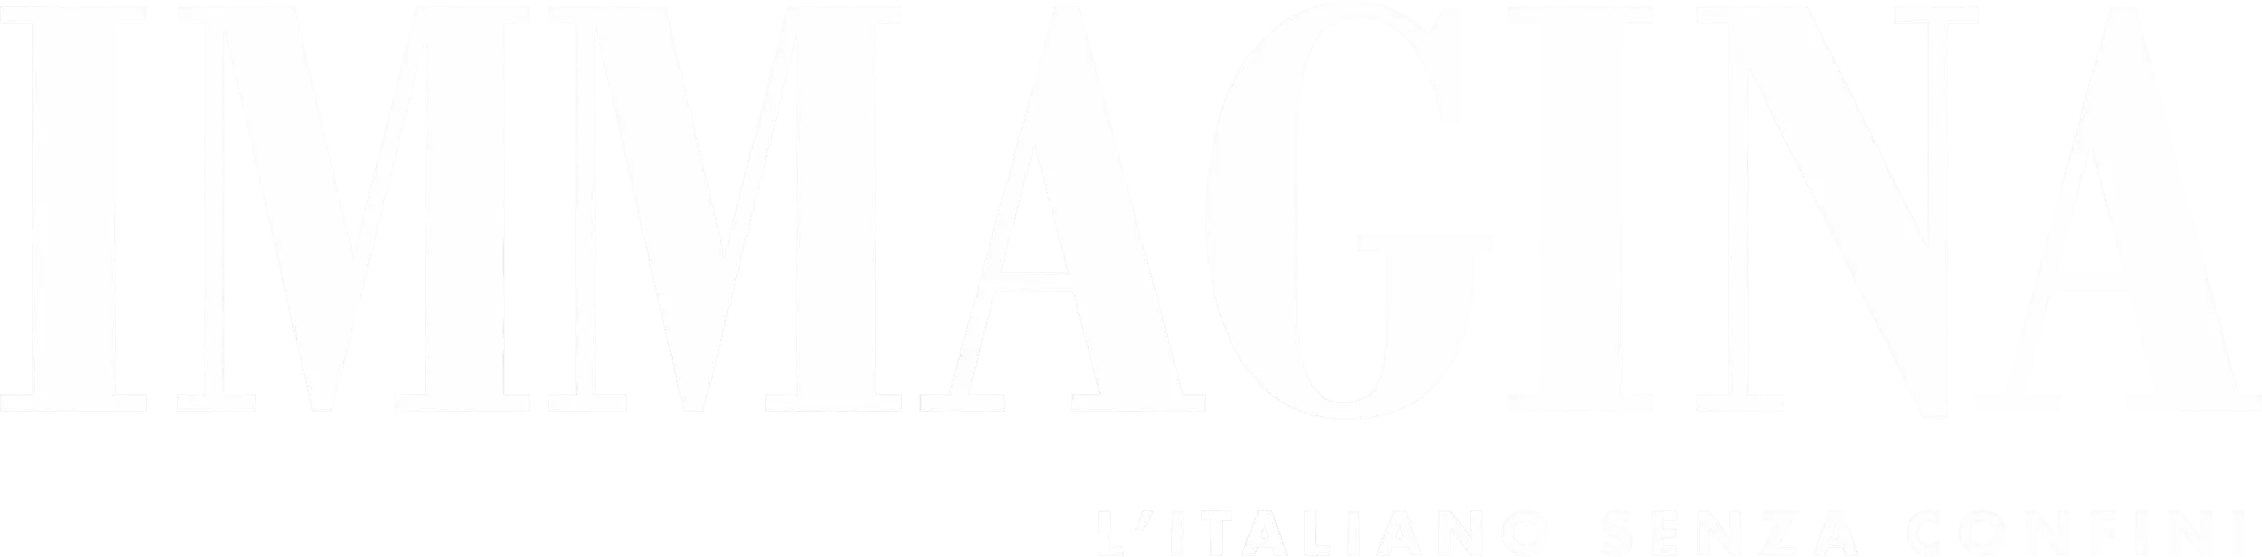 Immagina logo